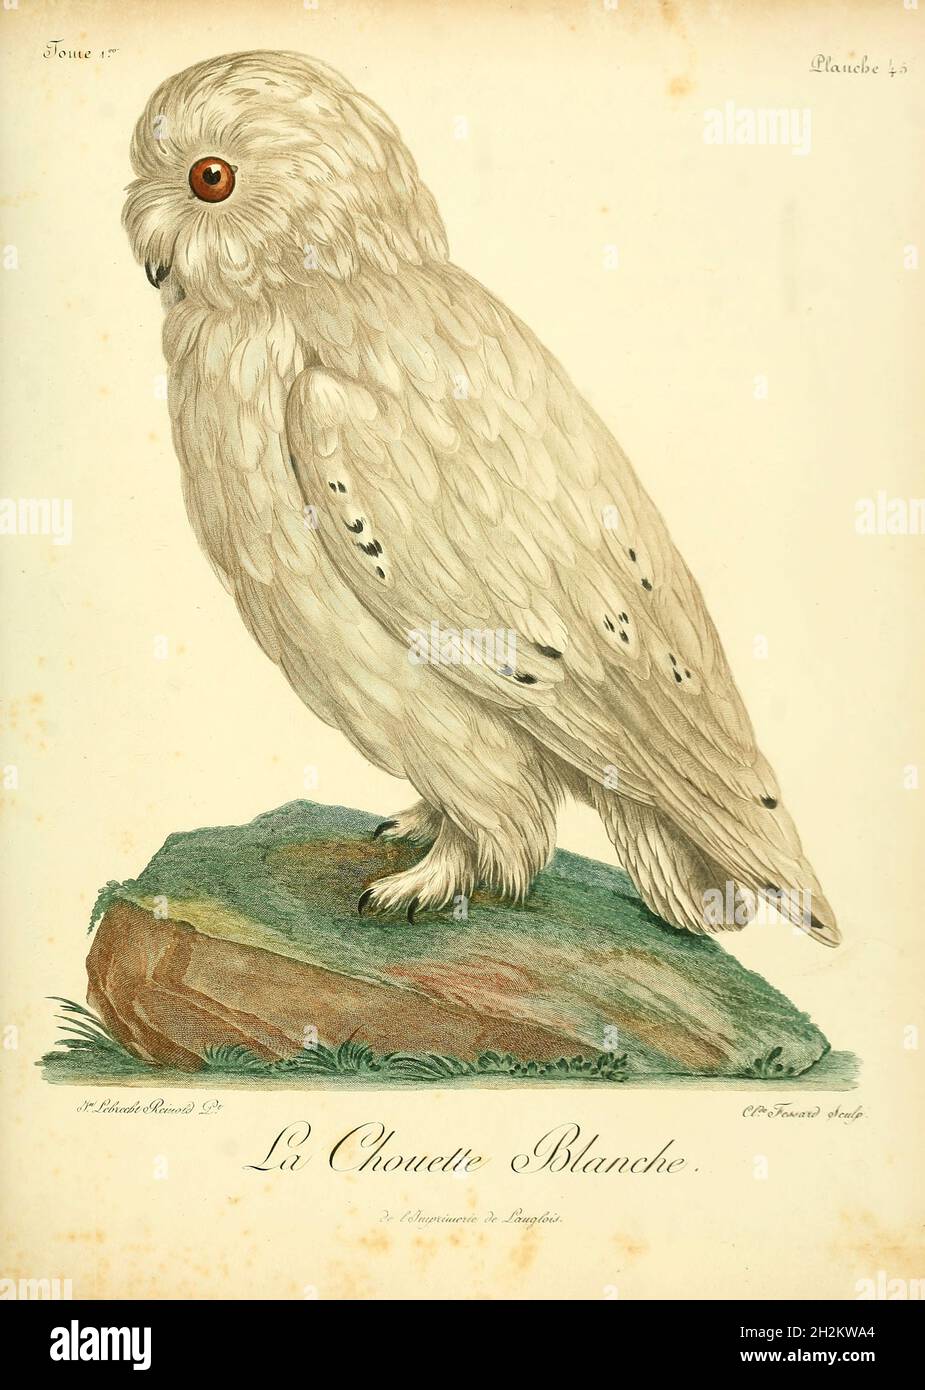 Barn owl, 18th century illustration Stock Photo